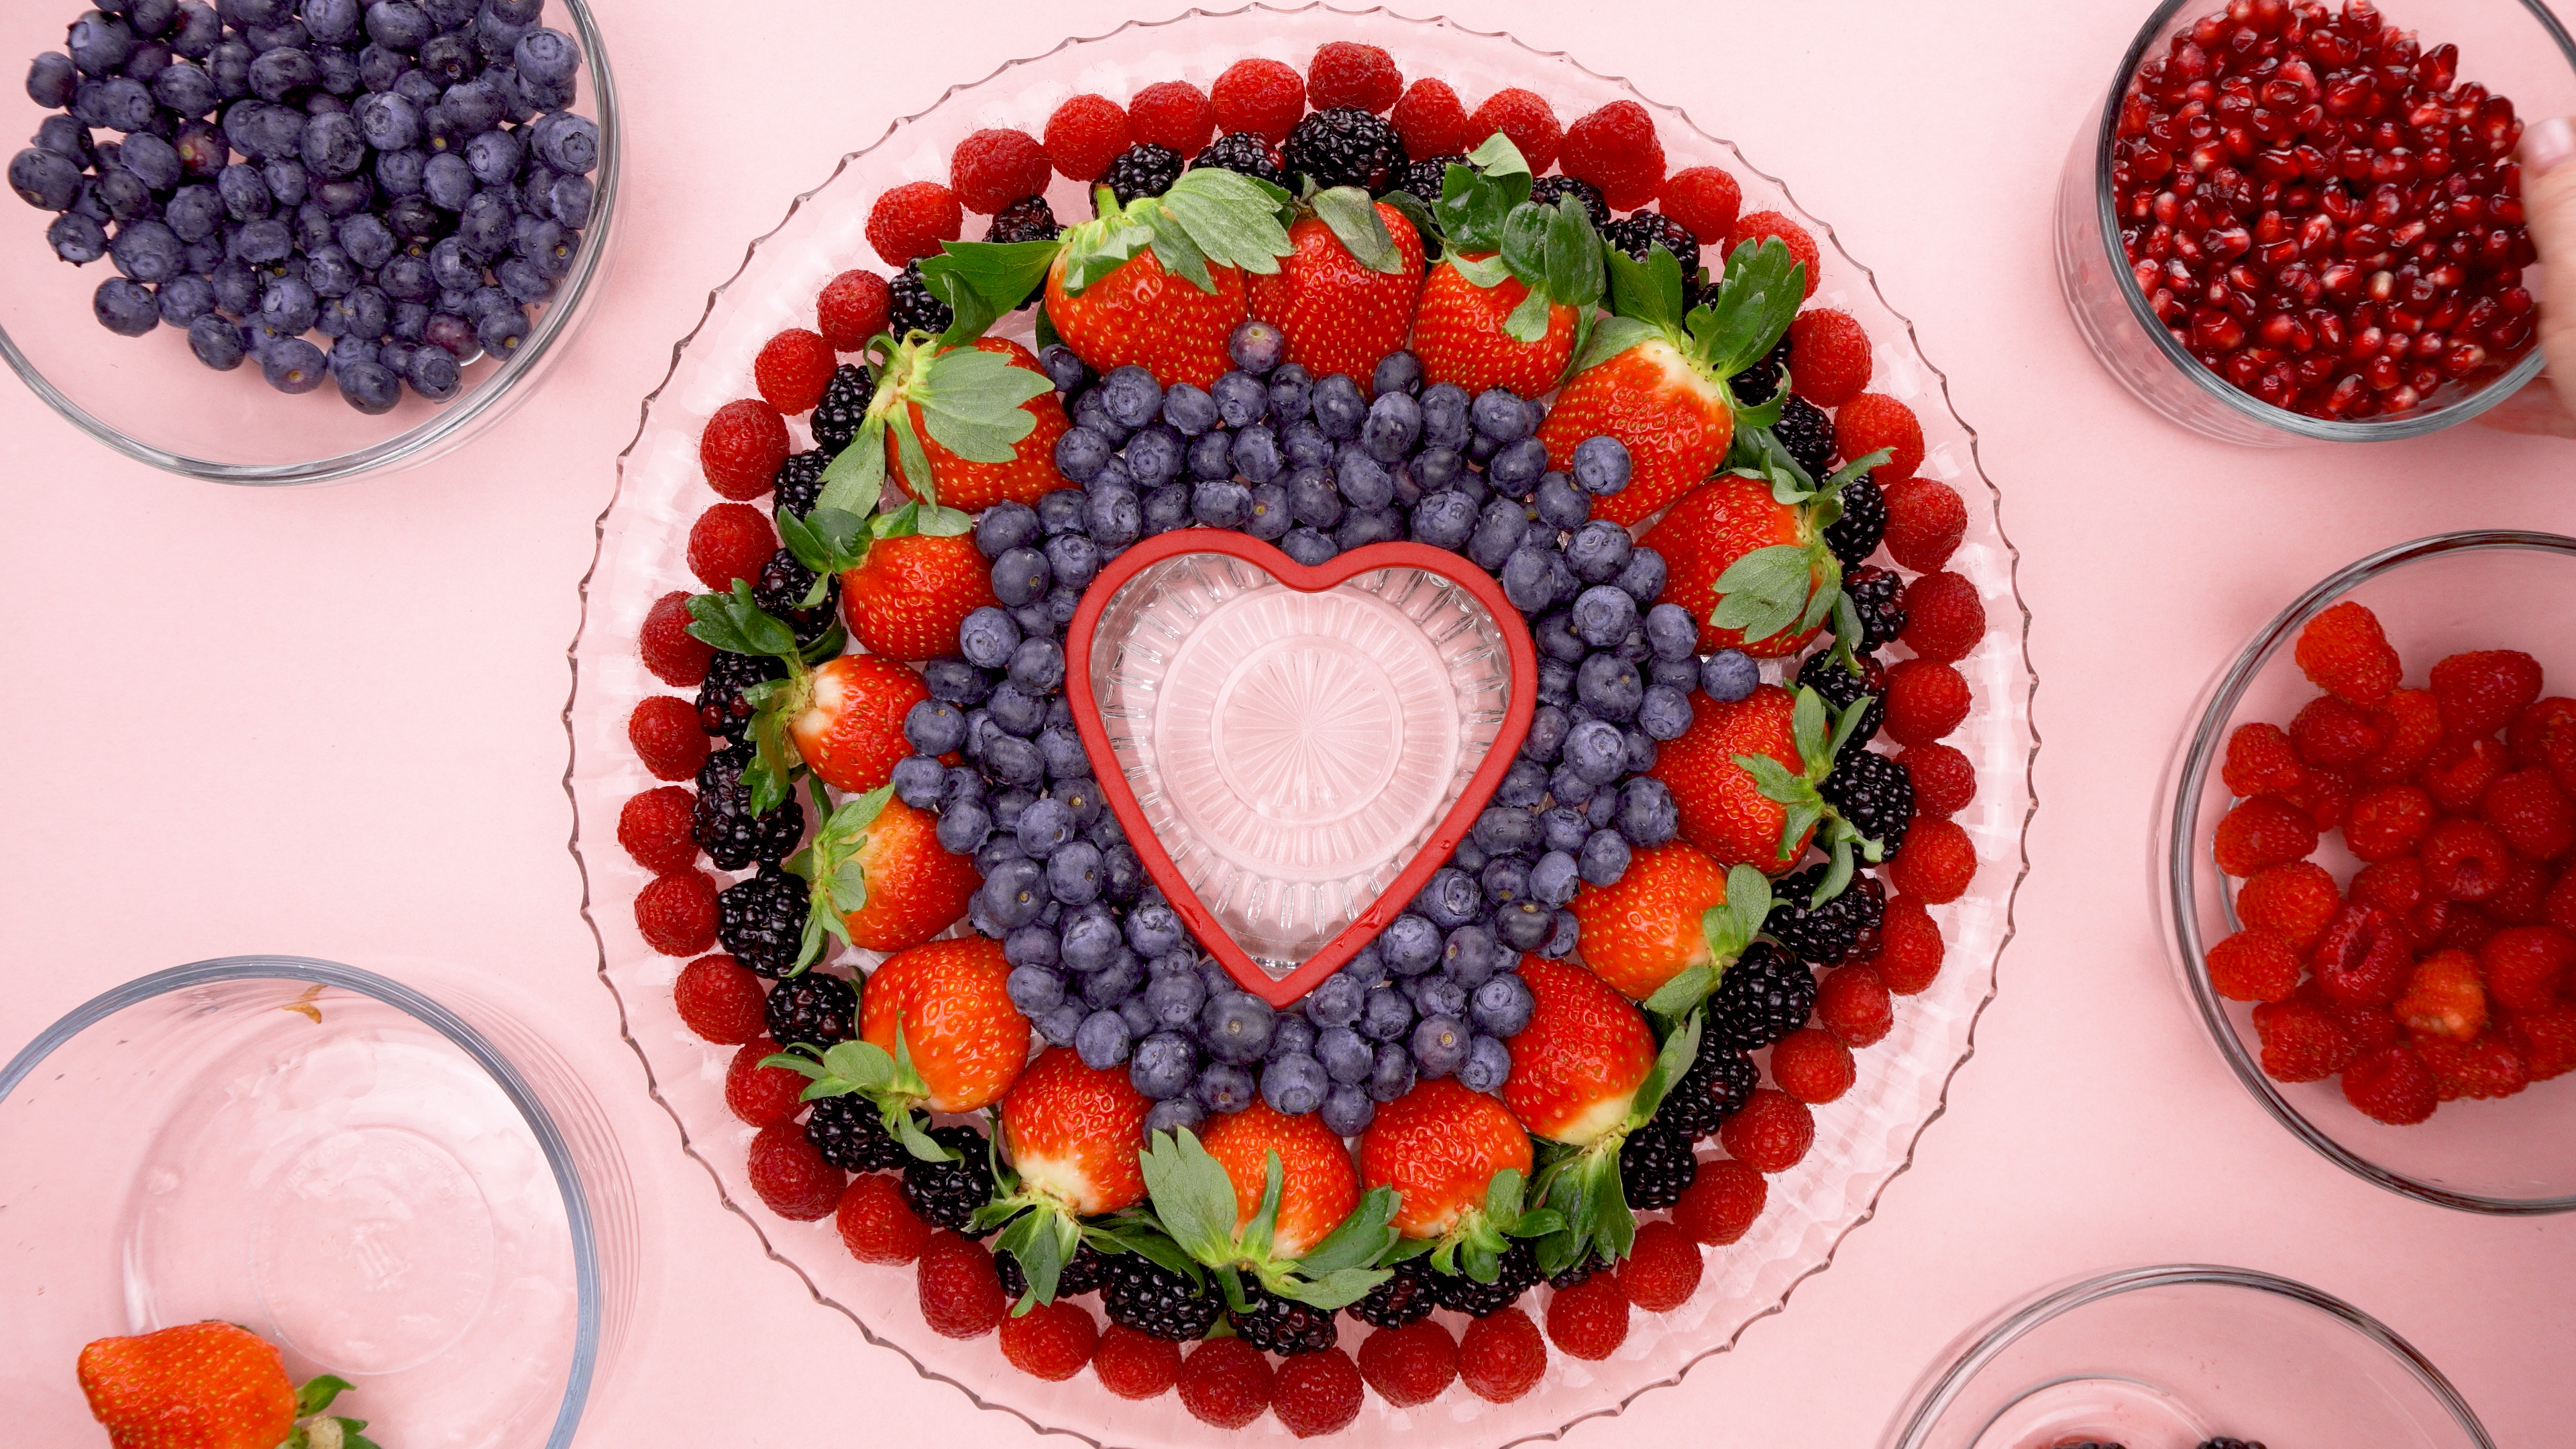 raspberries, Blackberries, Strawberries and blueberries around a heart cookie cutter